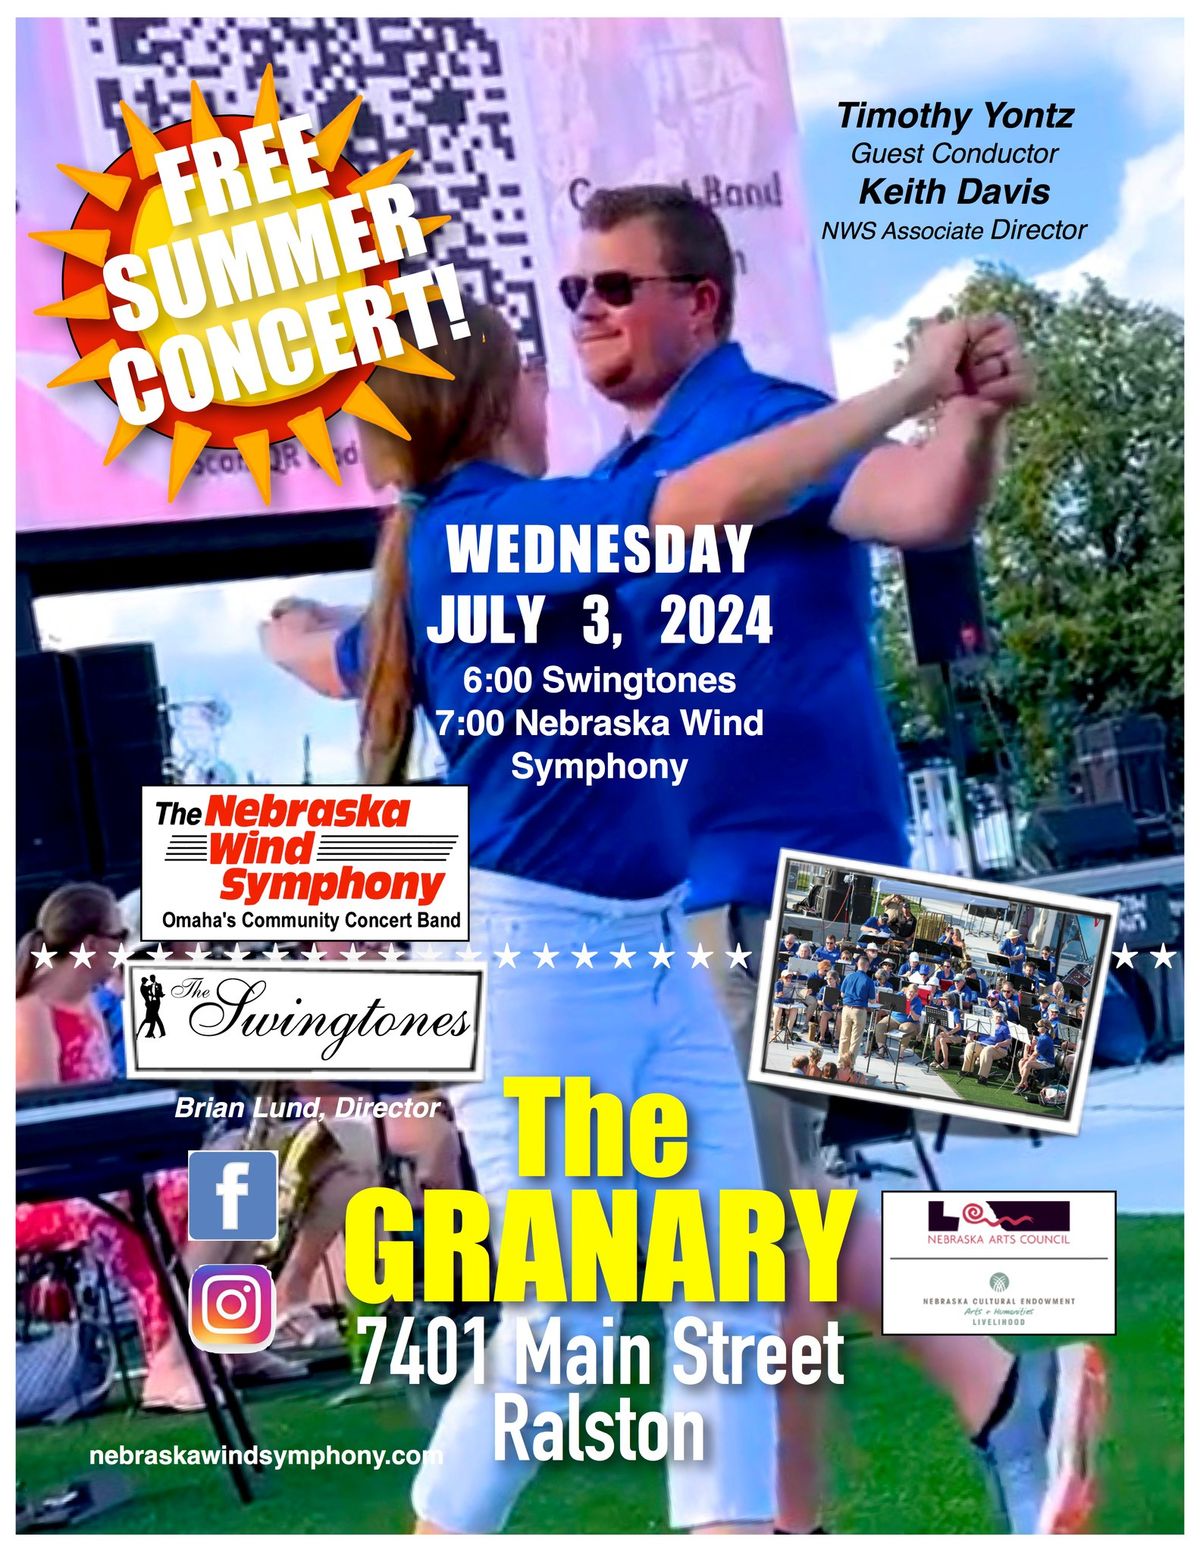 FREE Summer Concert at Ralston Granary